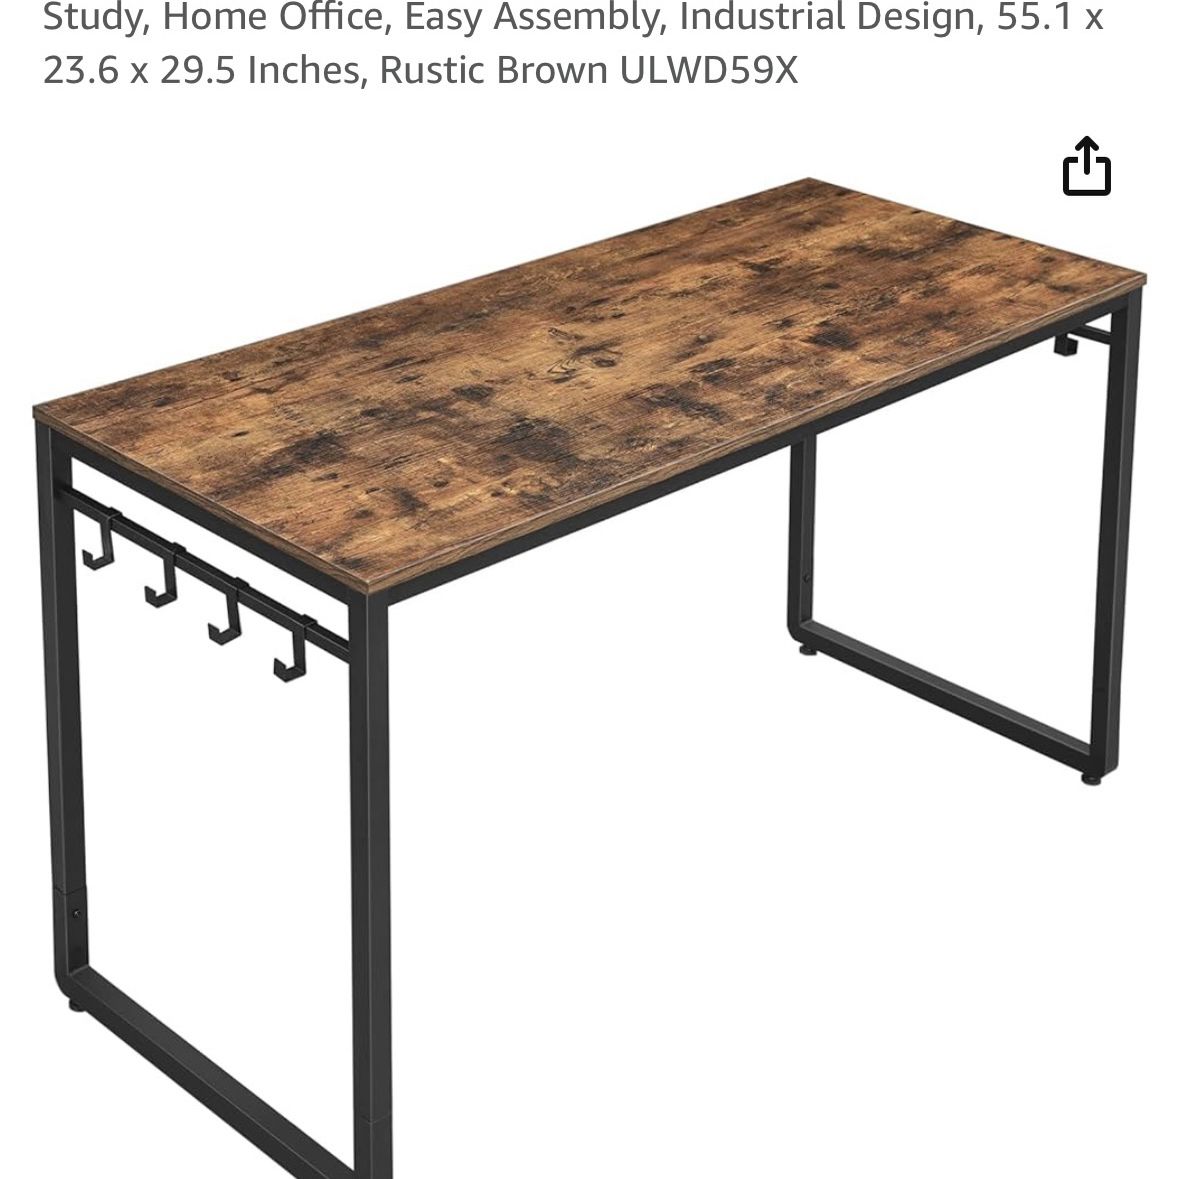 Barely Used Desk—Amazon’s #1 Choice